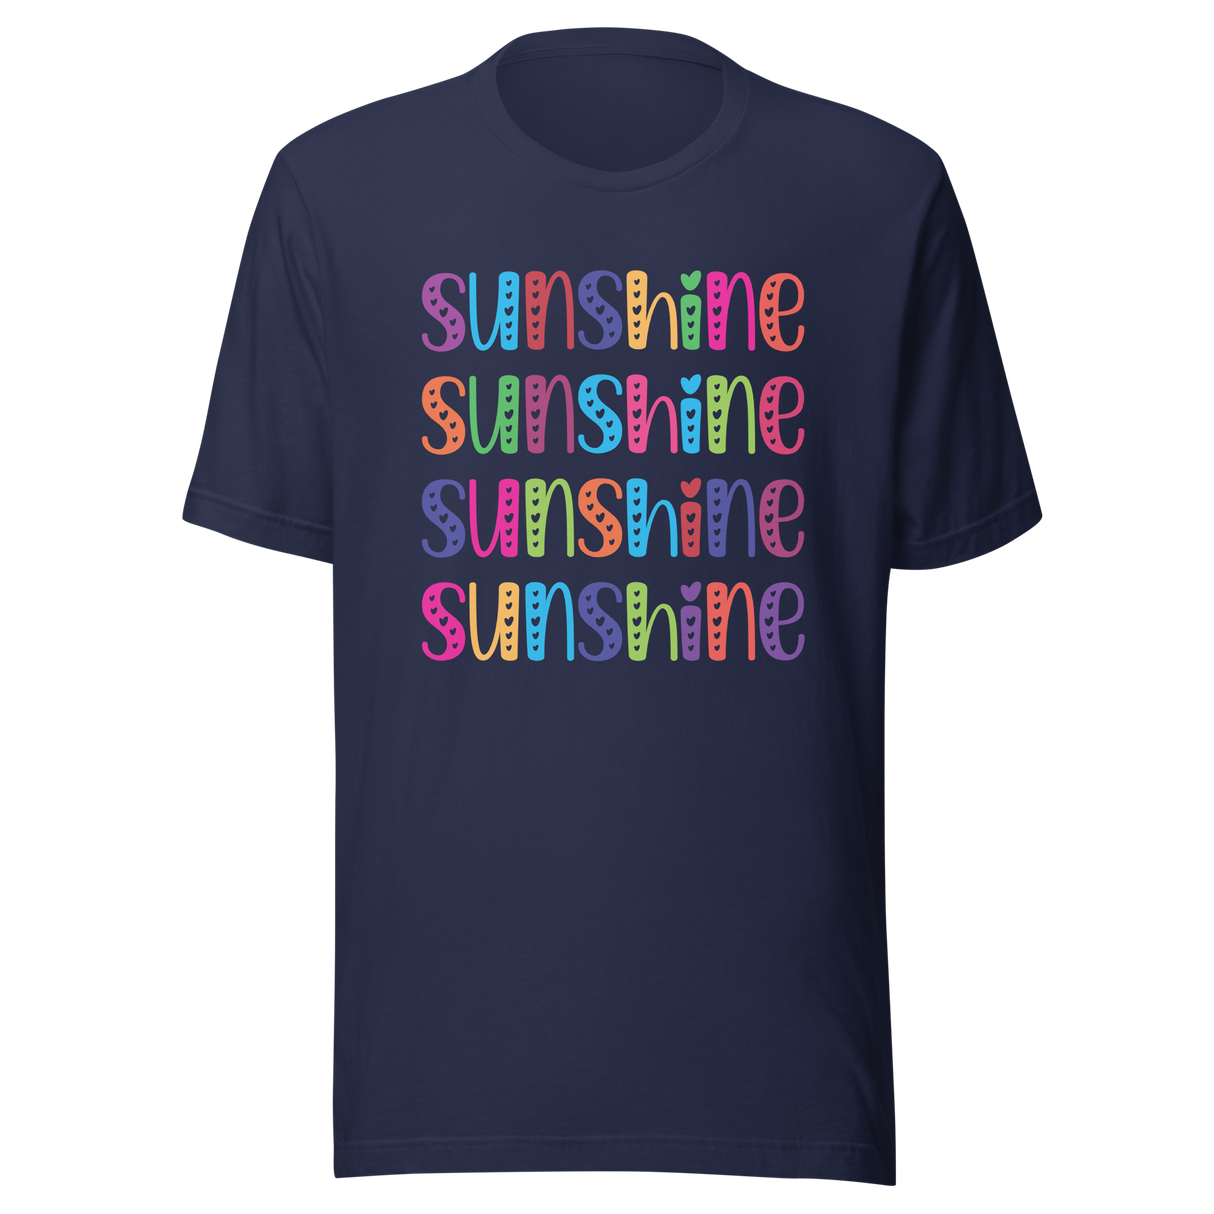 sunshine-sunshine-sunshine-sunshine-sunshine-tee-sun-t-shirt-girly-tee-t-shirt-tee#color_navy